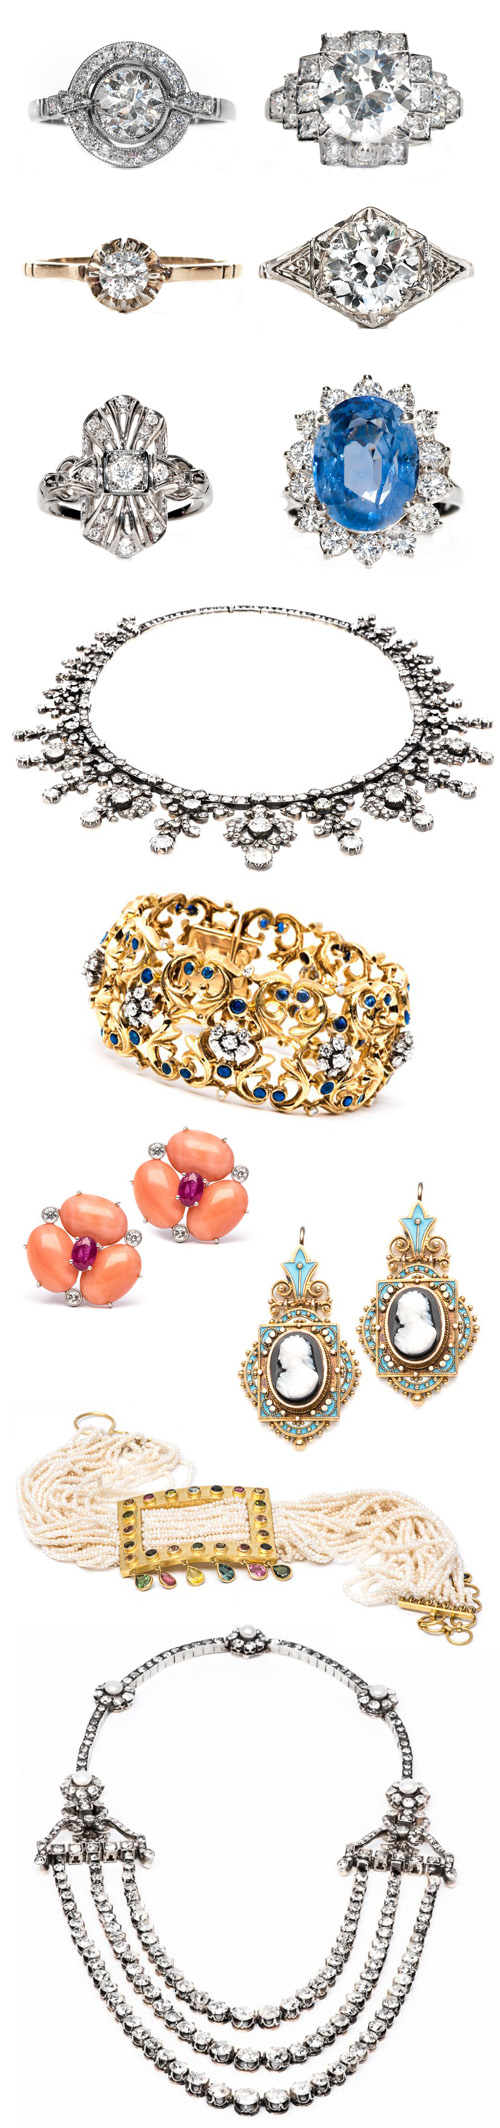 Vintage Estate Jewelry from Trumpet and Horn via Junebug Weddings | junebugweddings.com